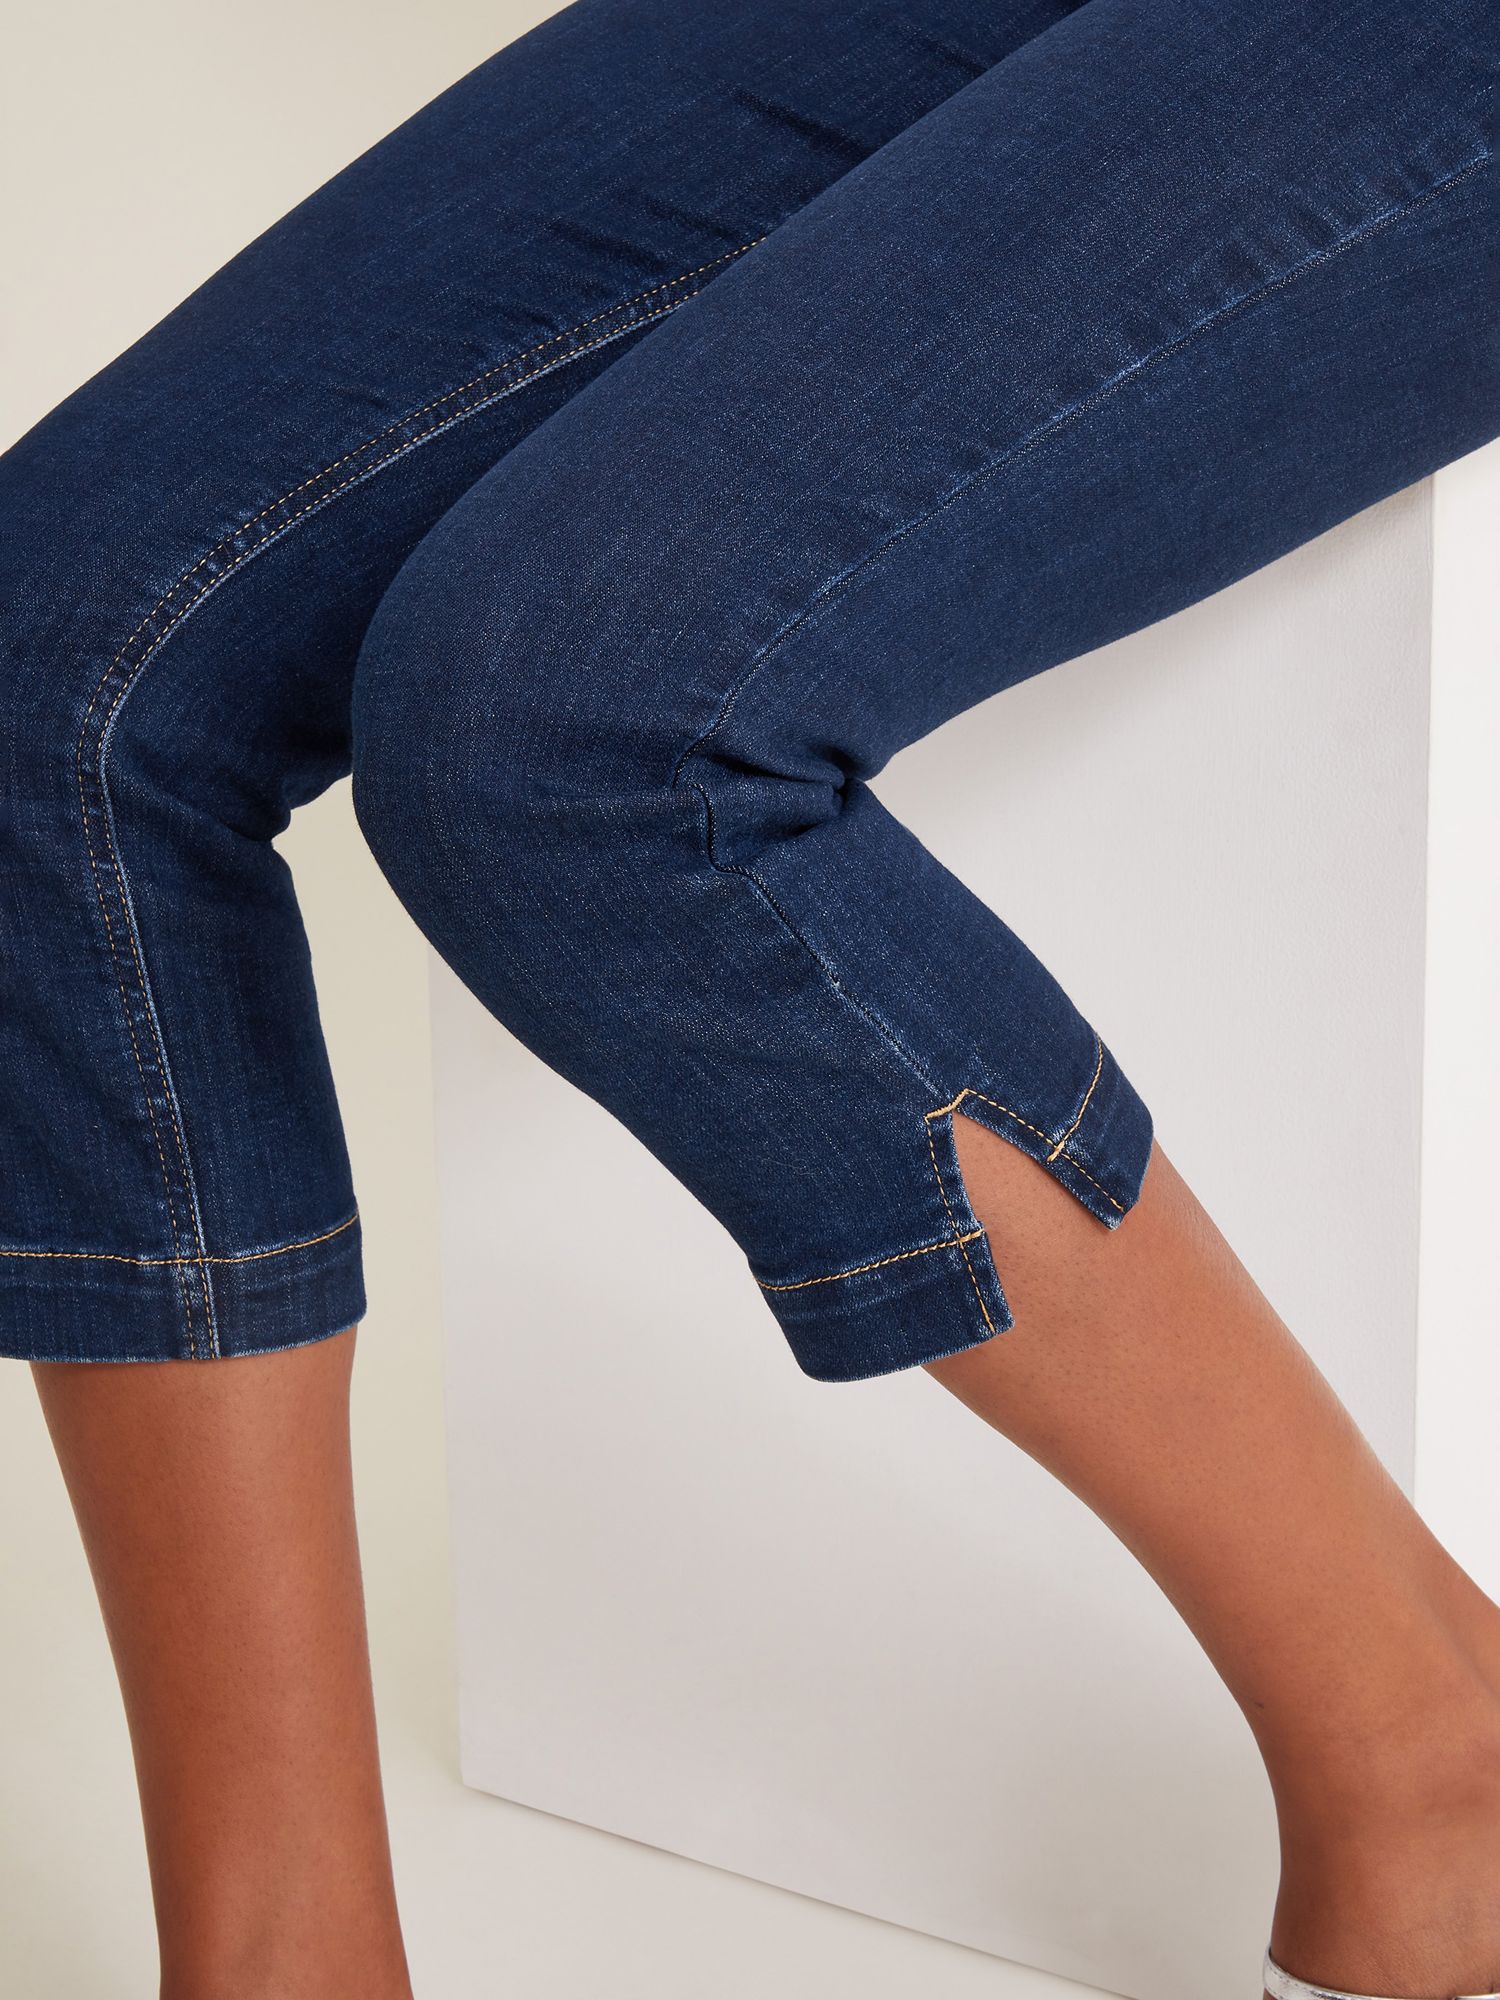 Monsoon Idabella Cropped Skinny Jeans, Indigo, 8